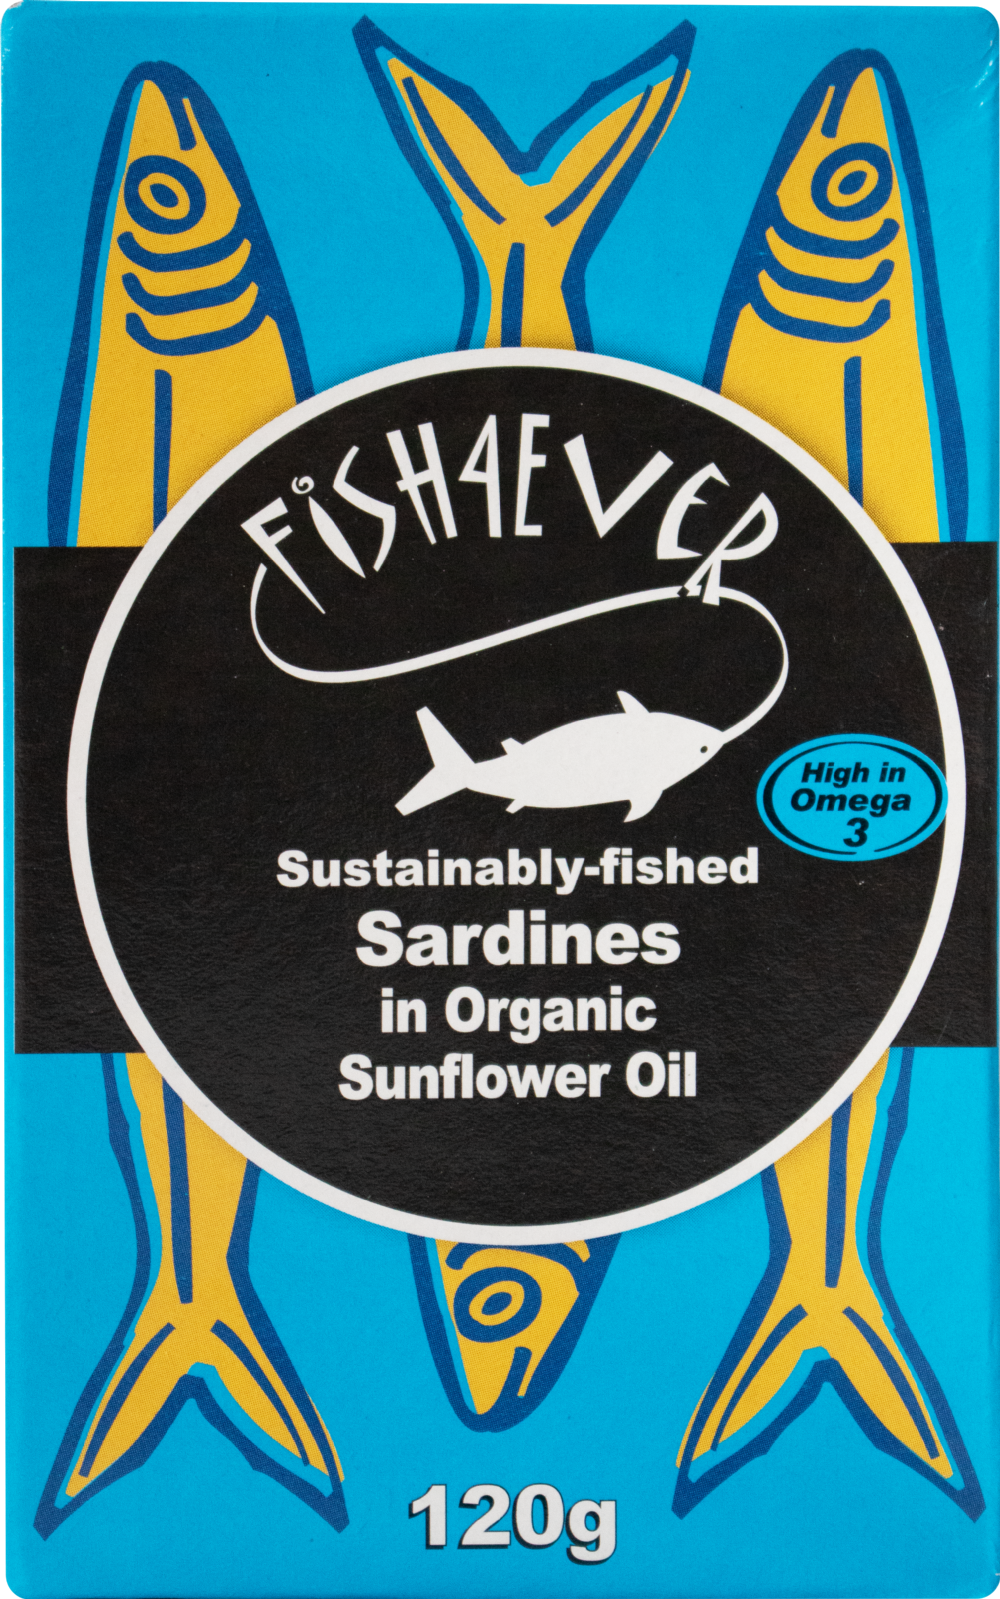 FISH 4 EVER Sardines in Organic Sunflower Oil 120g